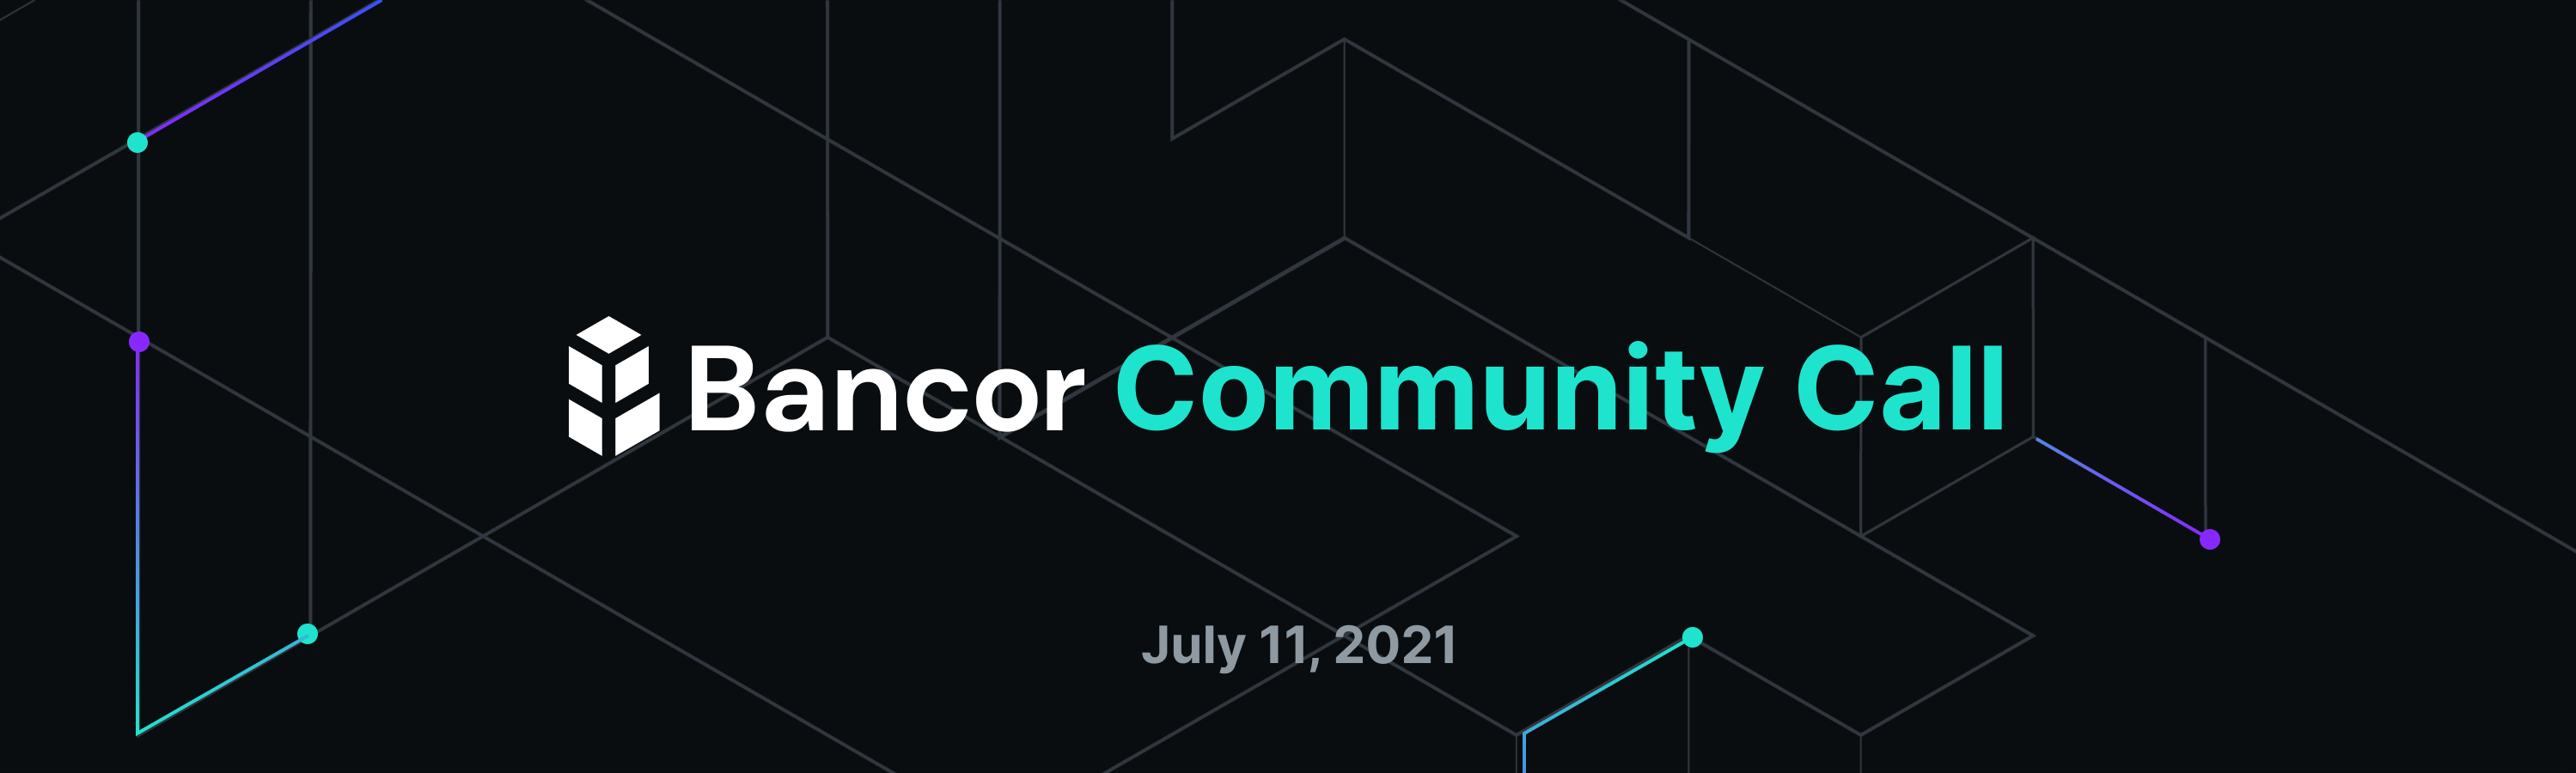 Bancor Community Call | July 11, 2021